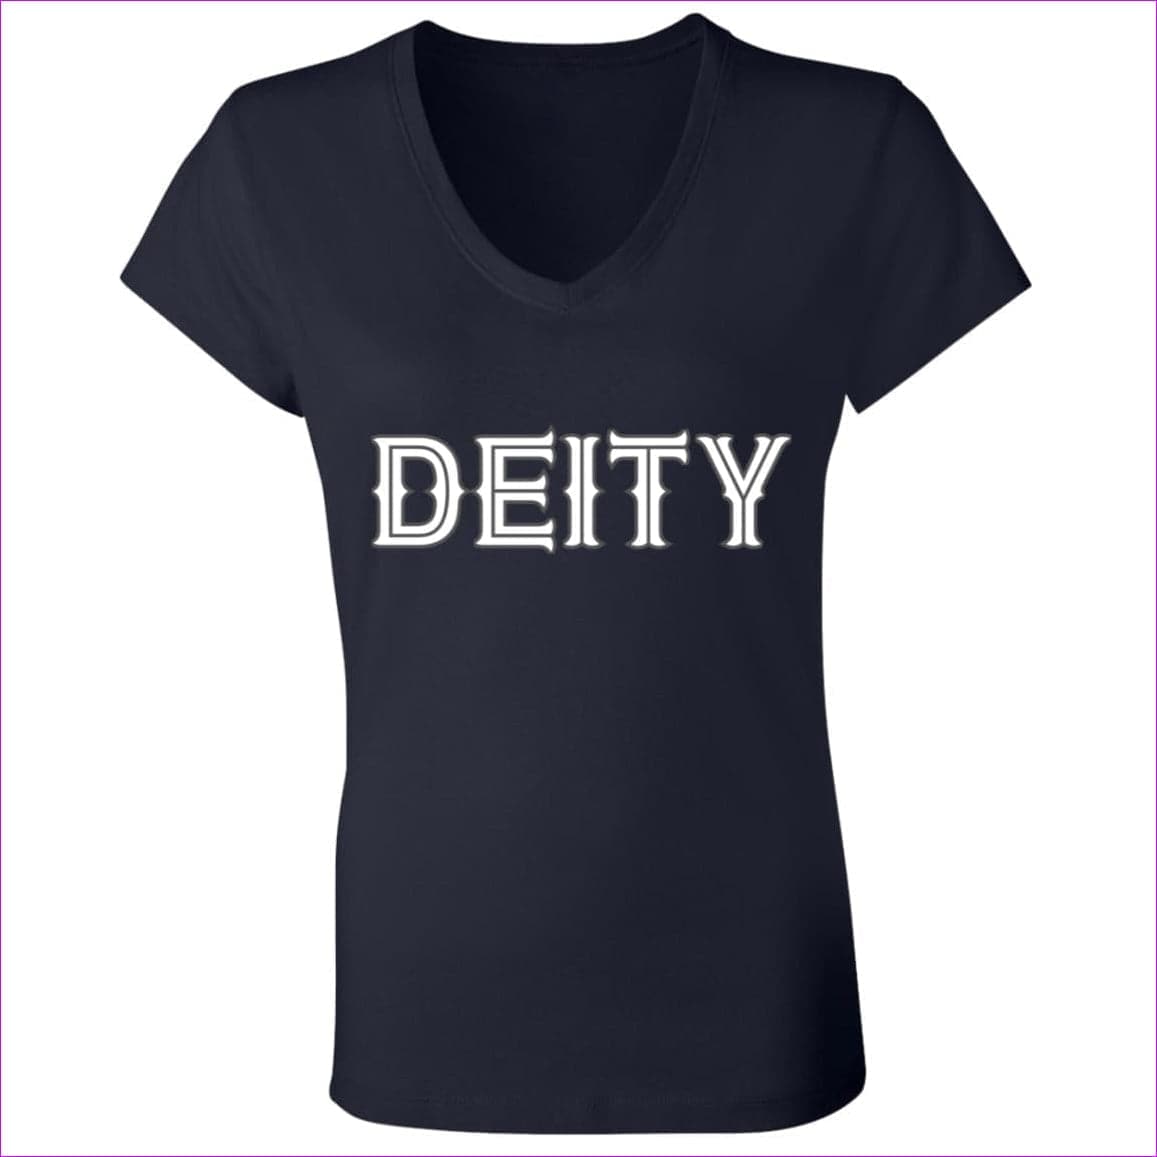 Navy - Deity Ladies' Jersey V-Neck T-Shirt - Womens T-Shirts at TFC&H Co.